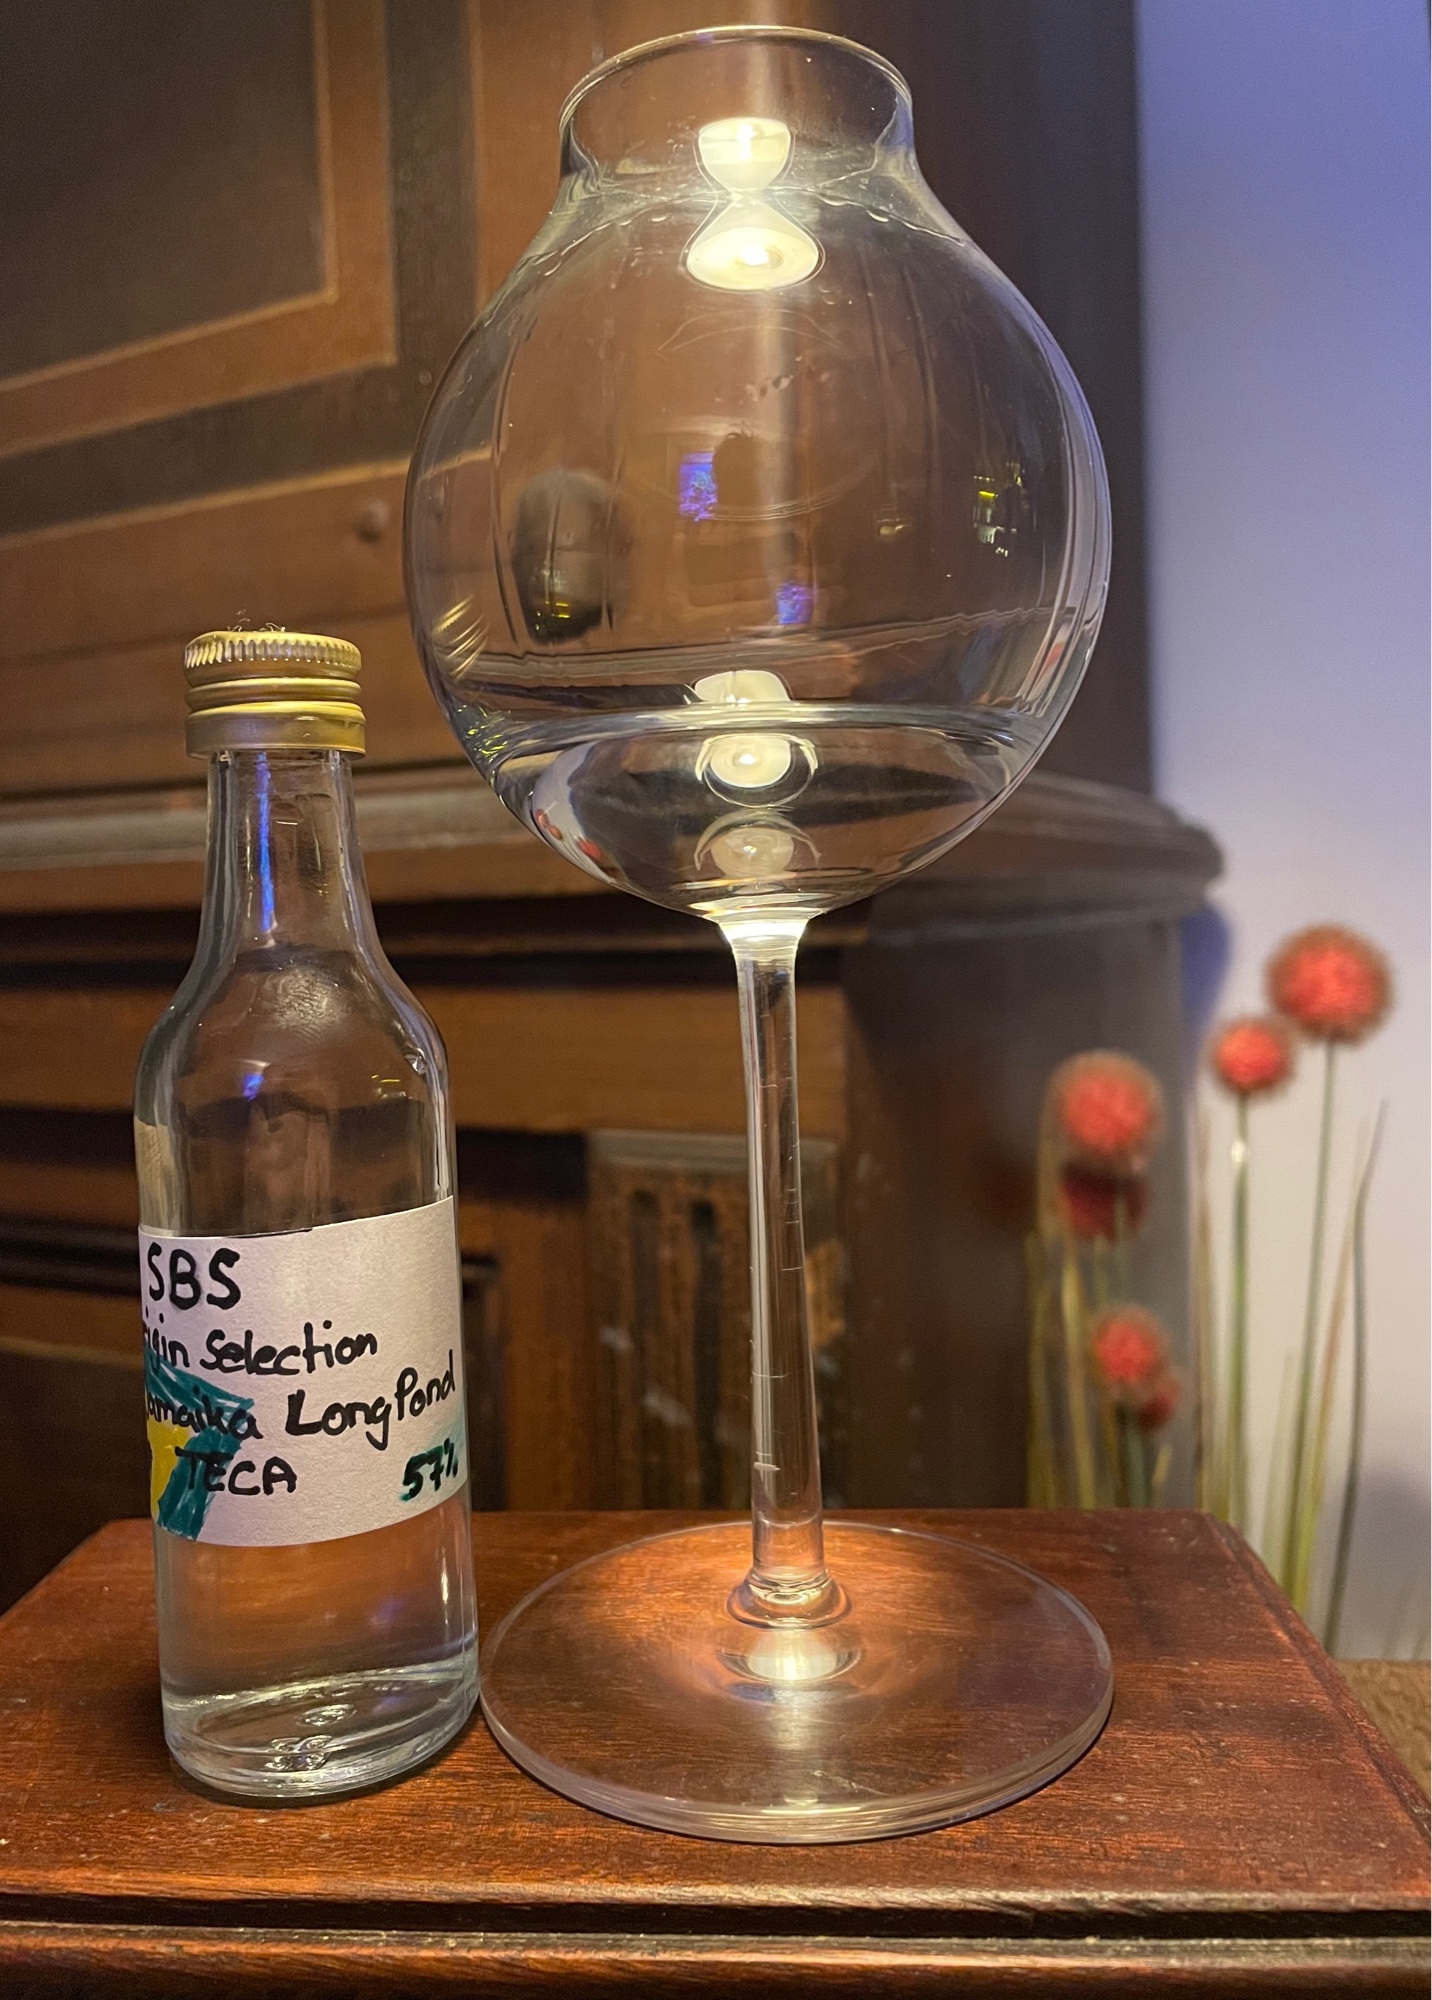 Photo of the bottle taken from user Frank